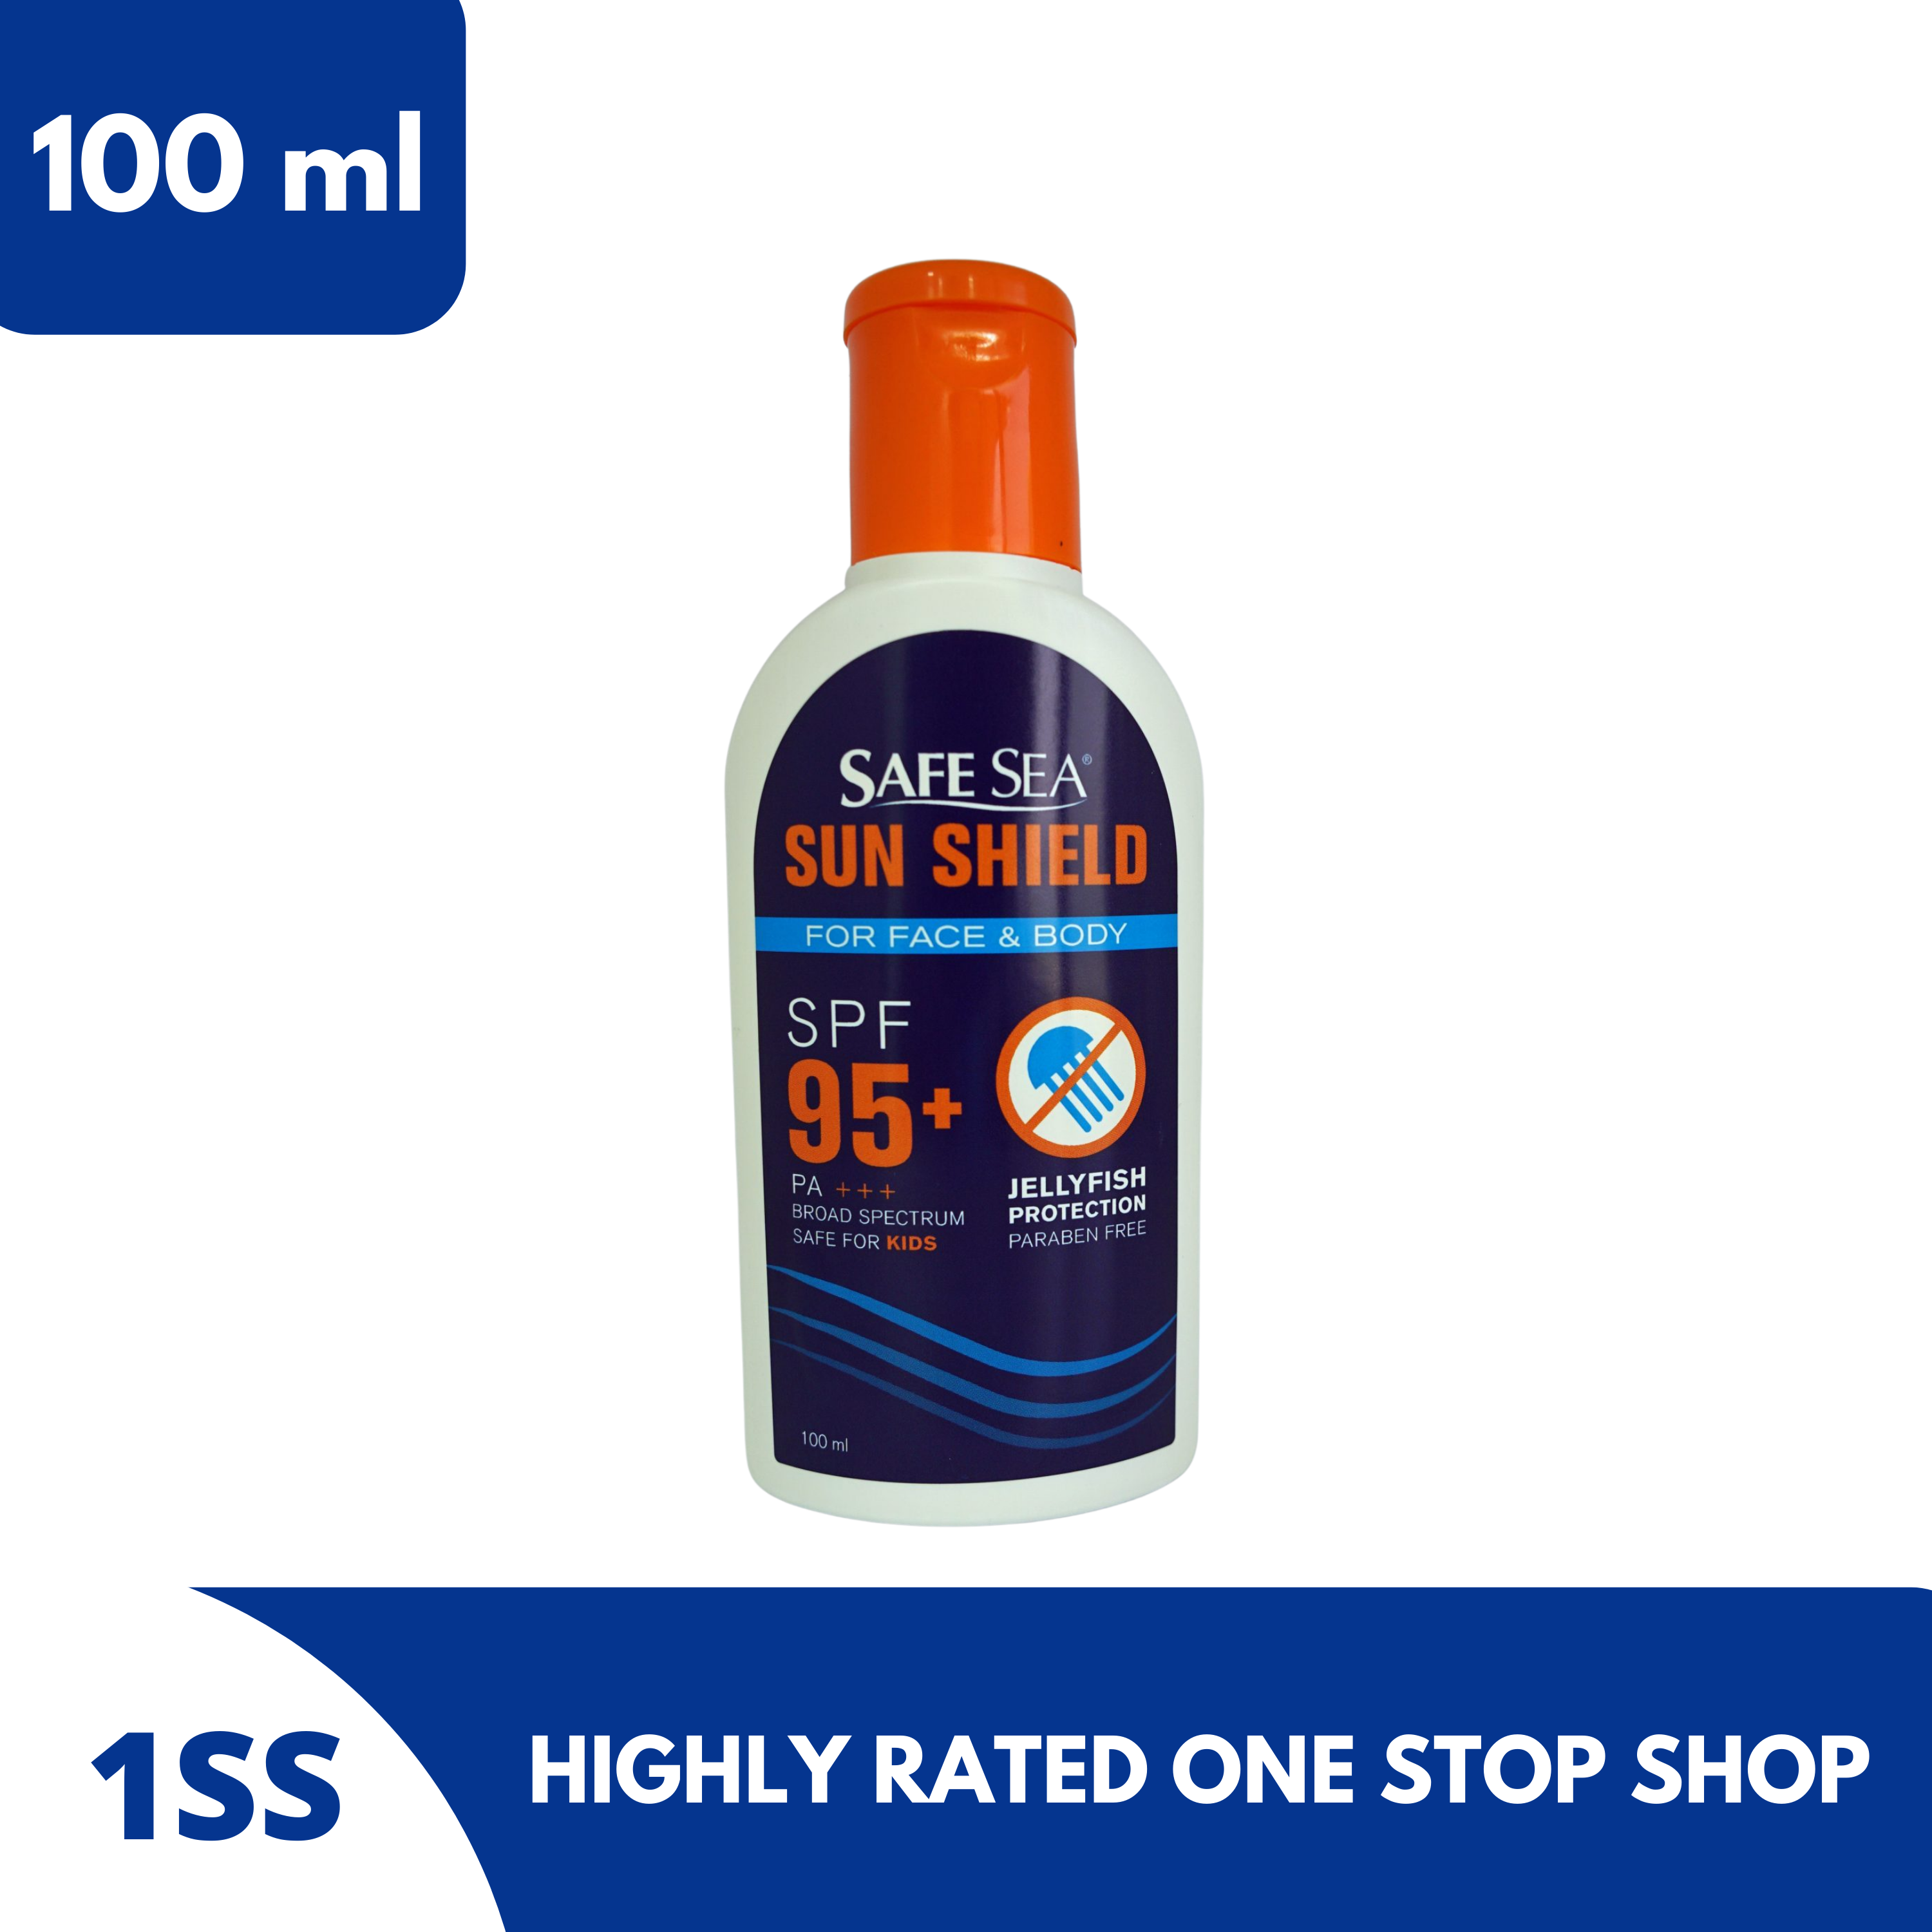 Safe Sea Sun Shield For Face & Body SPF95+ with Anti-Jellyfish